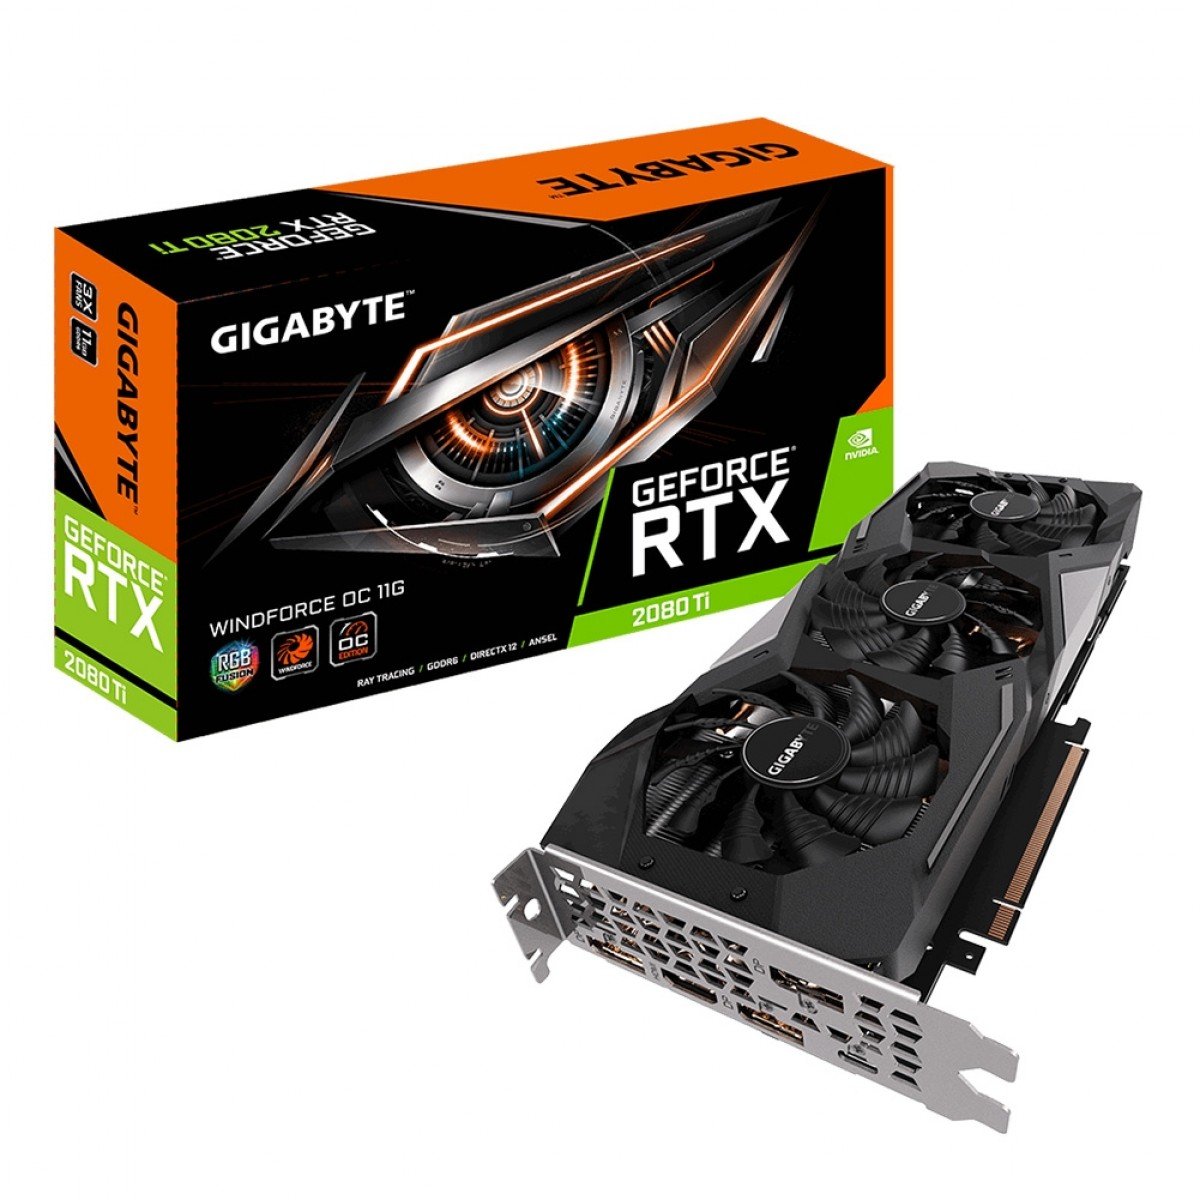 GIGABYTE GeForce RTX 2080 Ti